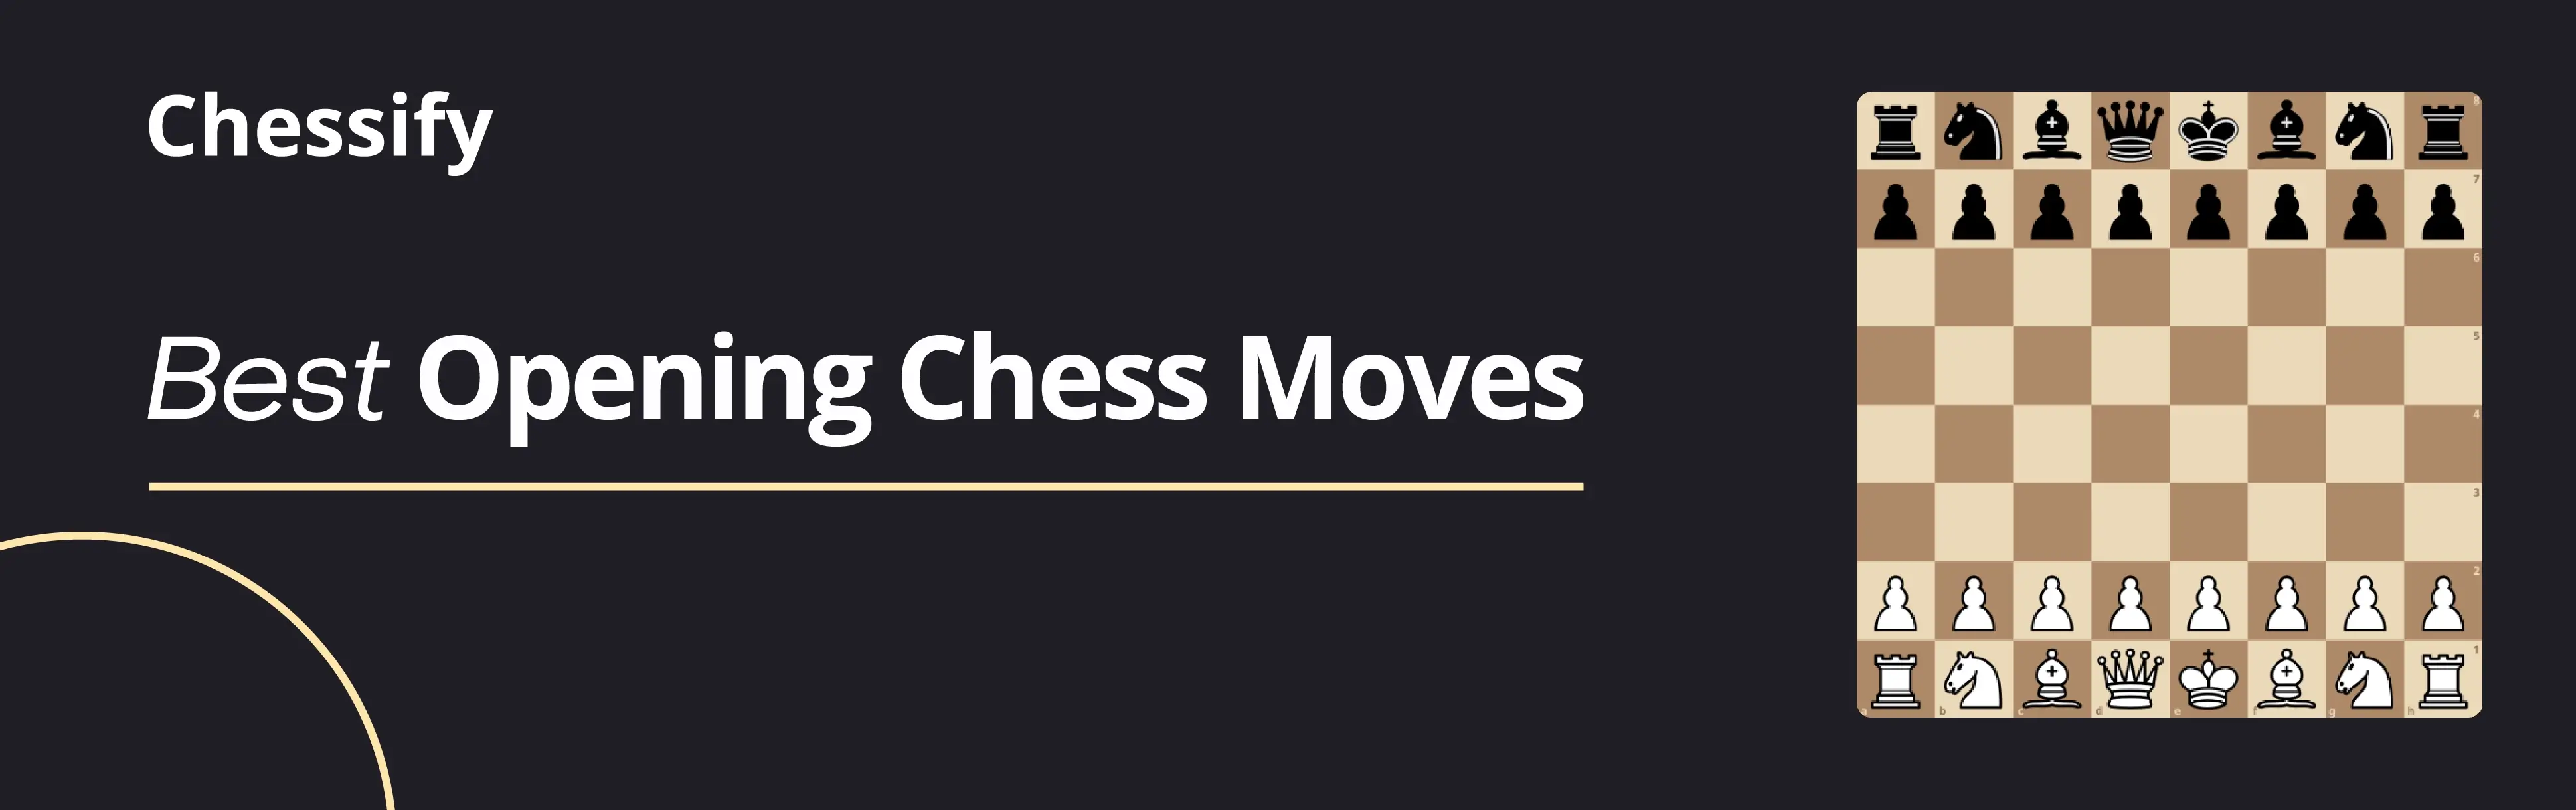 Chess Openings: Learn to Play the Reti Opening / Reti Gambit! 